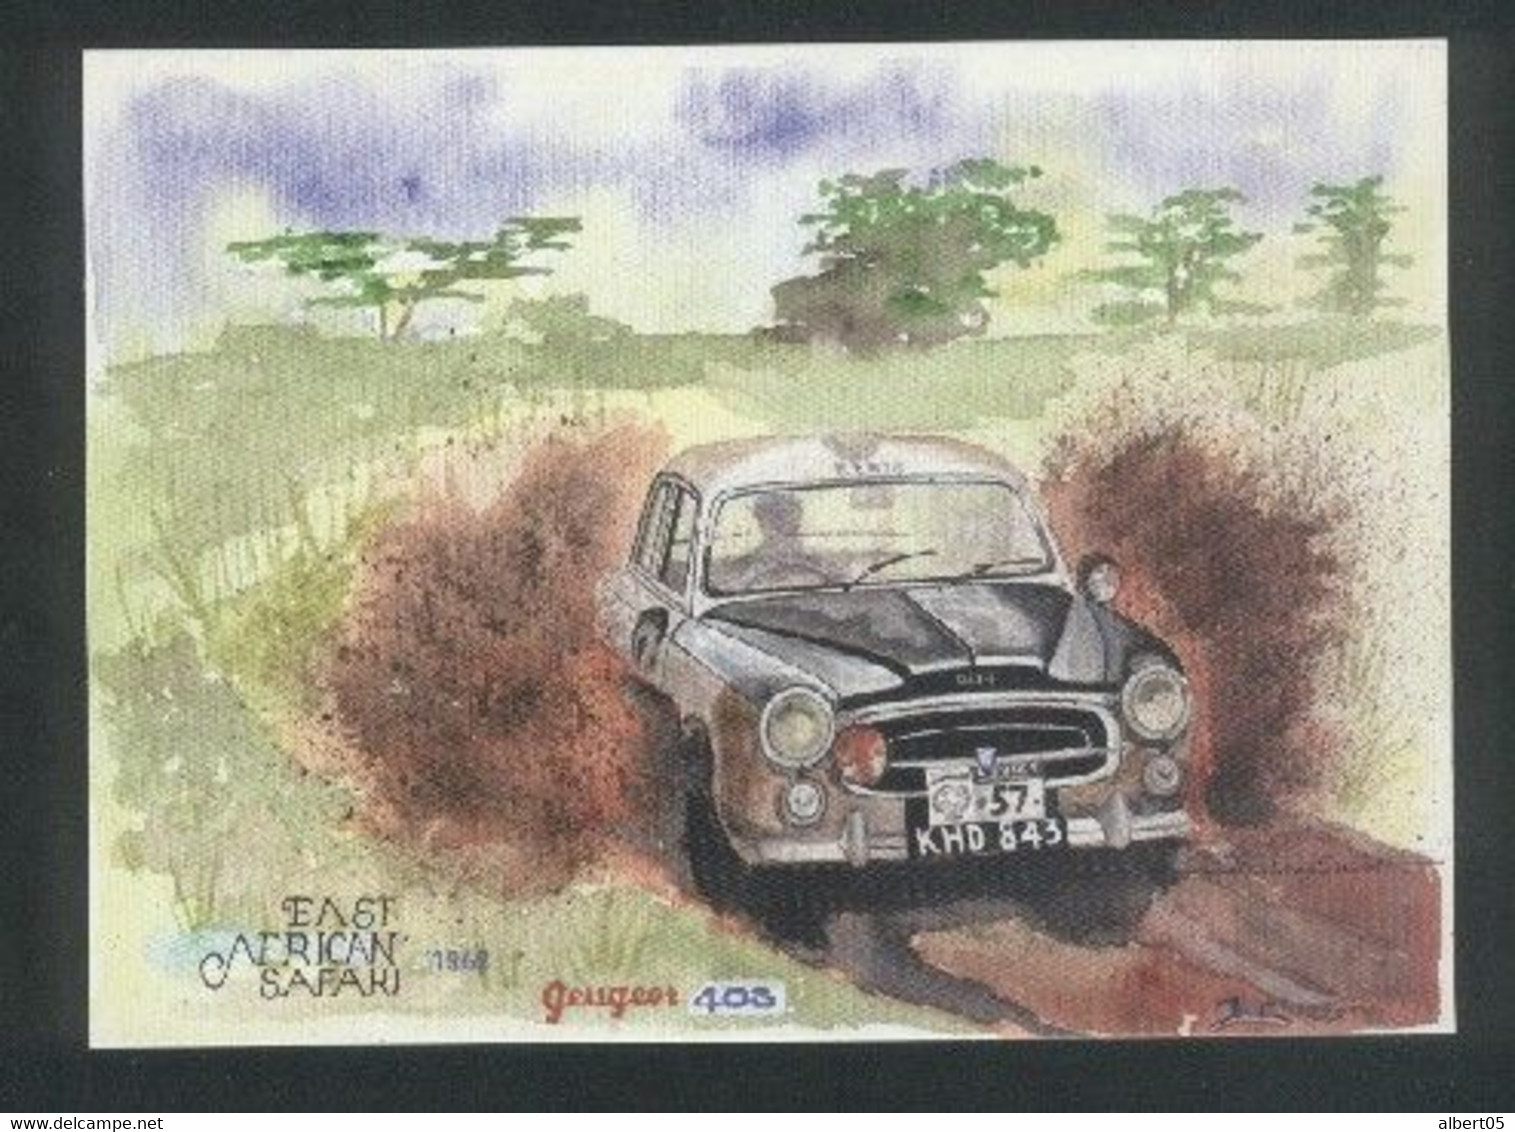 East African Safari - 1962 - Peugeot 403 - Rally Racing